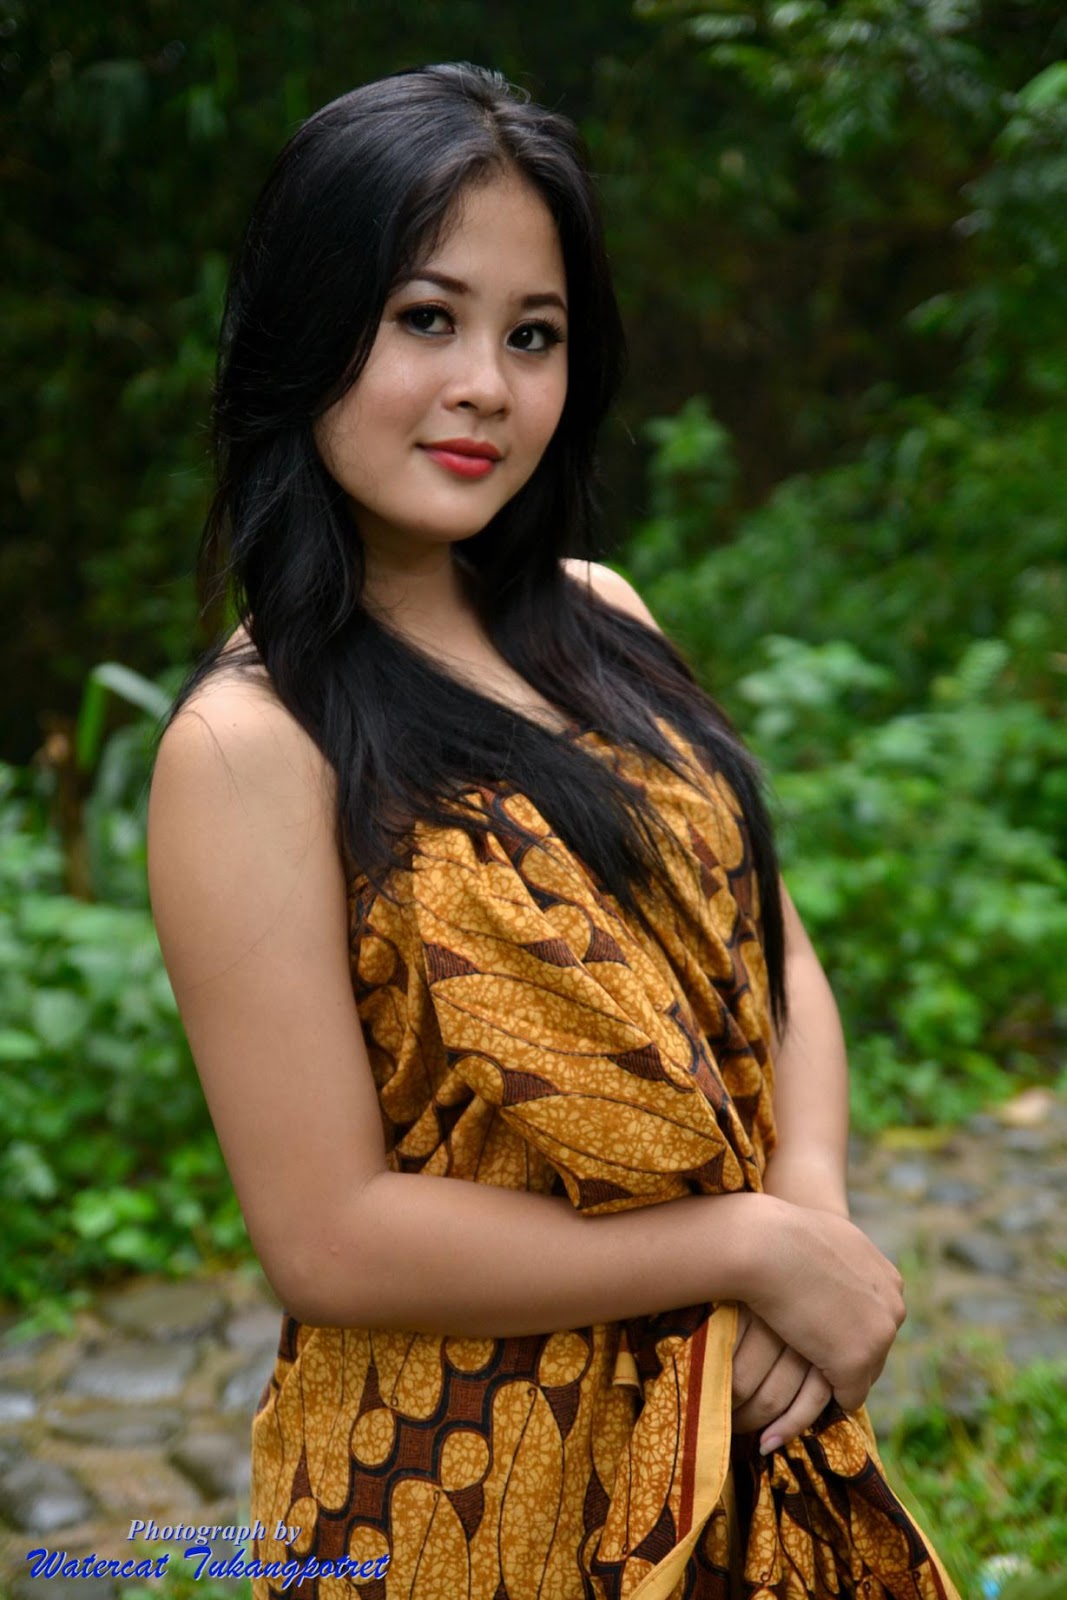 Artis indo hot. Desa актриса. Лаос девушки. Индонезийки девушки. Юные красивые девушки Индонезии.